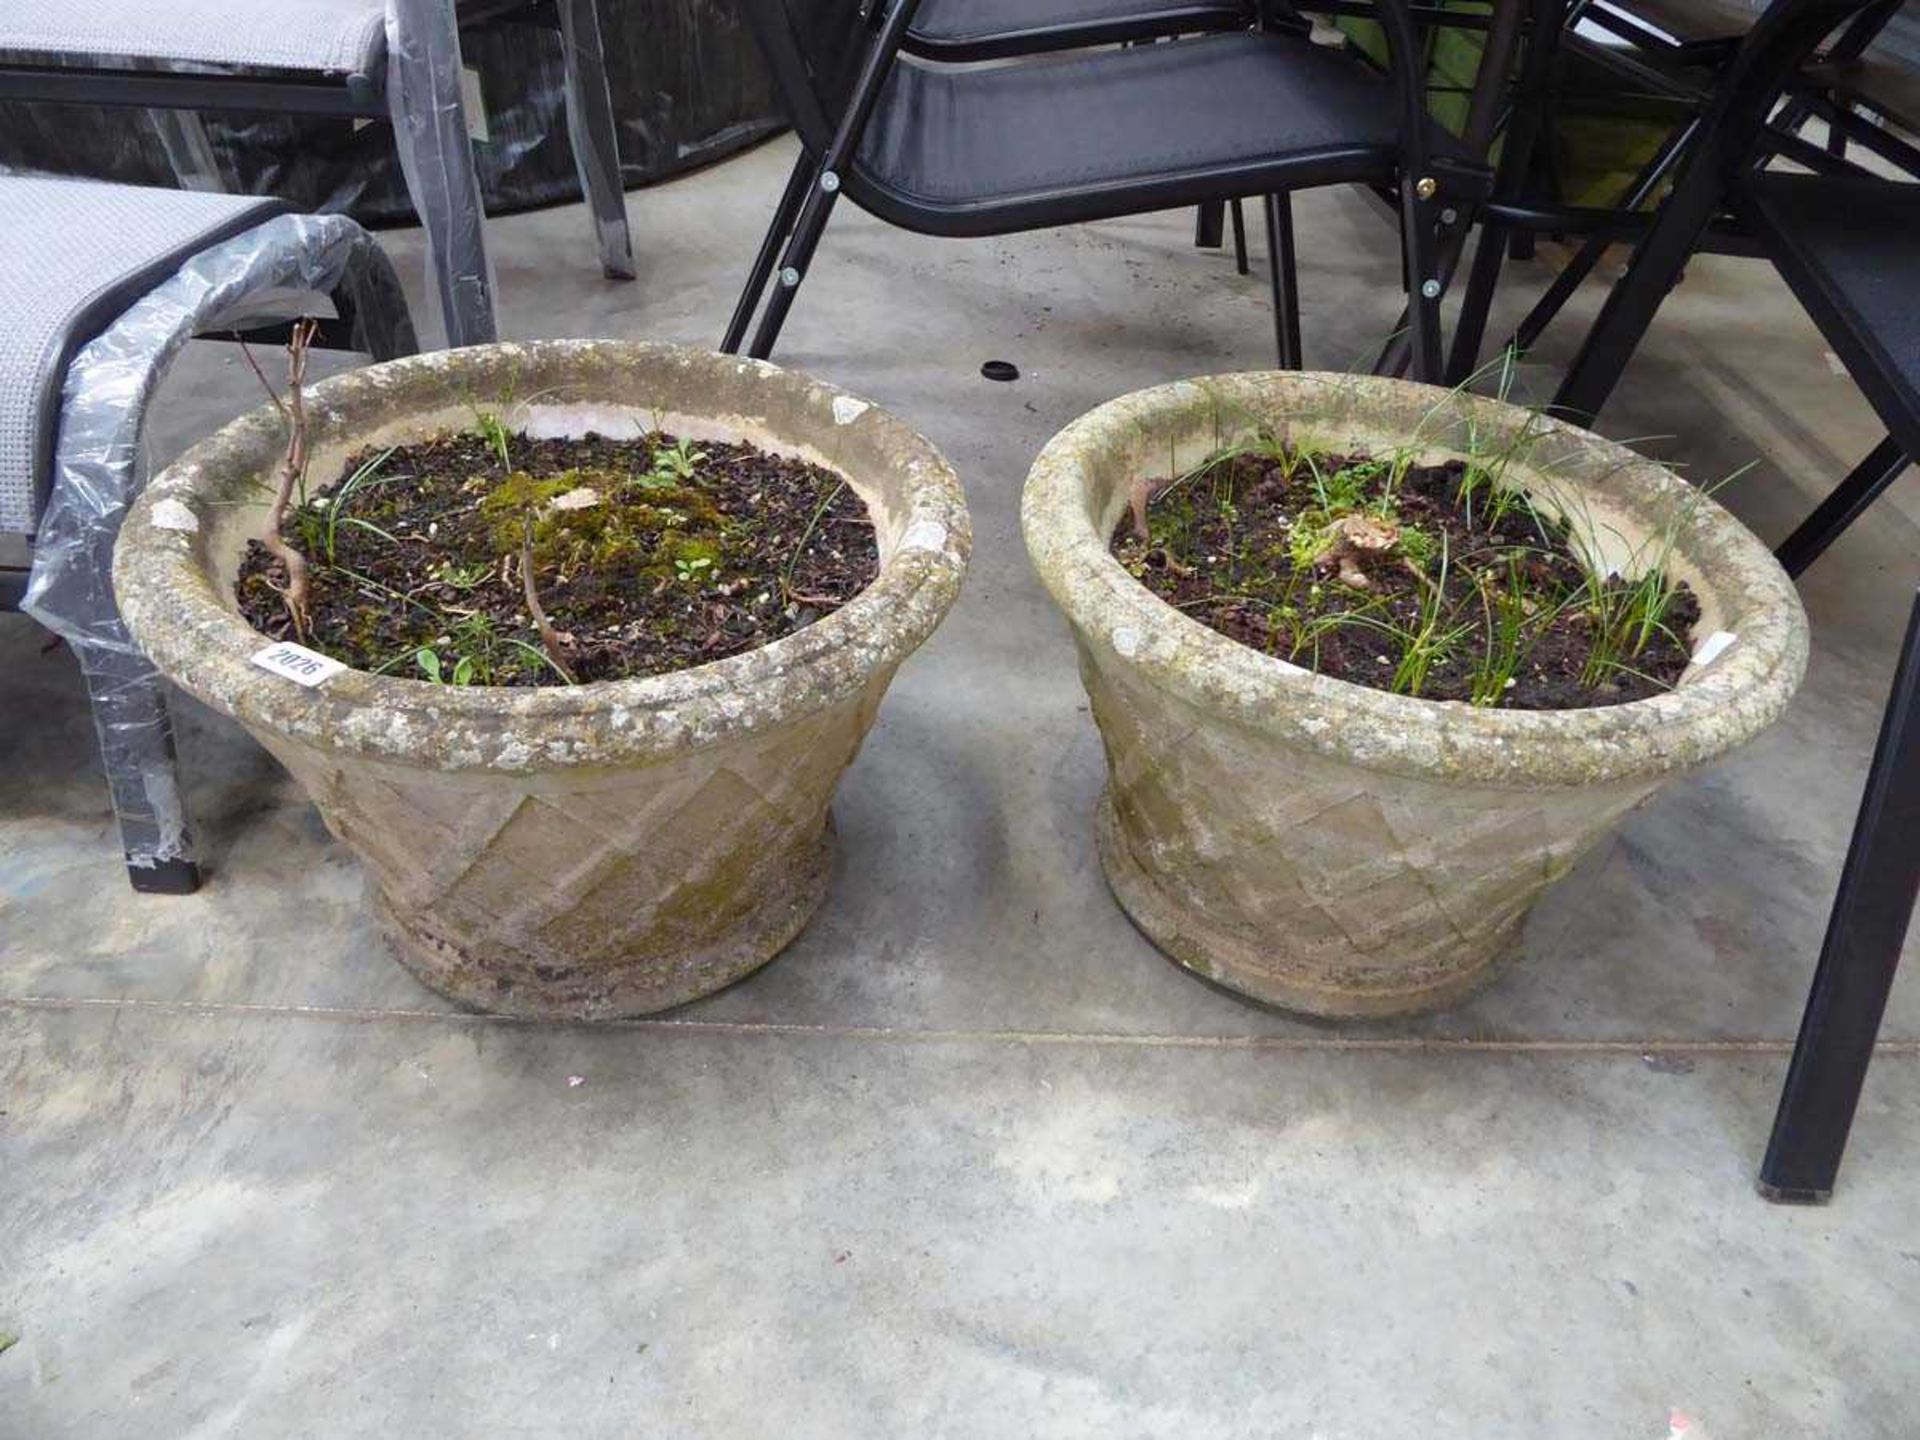 Pair of concrete circular planters